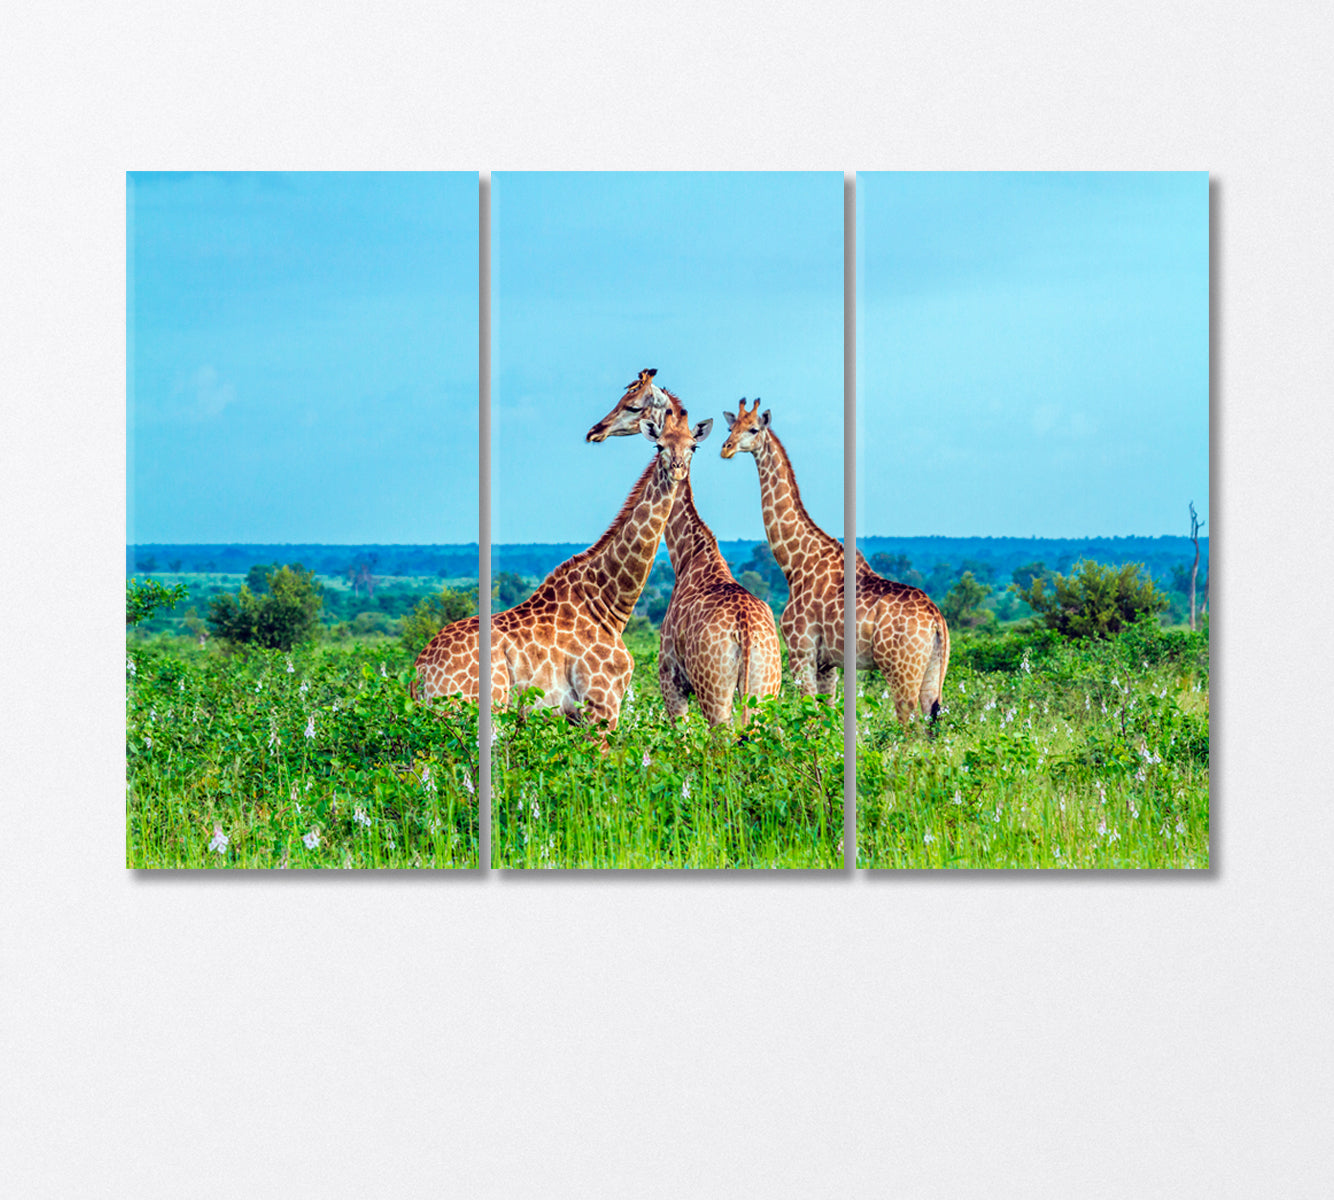 Three Giraffes in Kruger National Park Africa Canvas Print-Canvas Print-CetArt-3 Panels-36x24 inches-CetArt